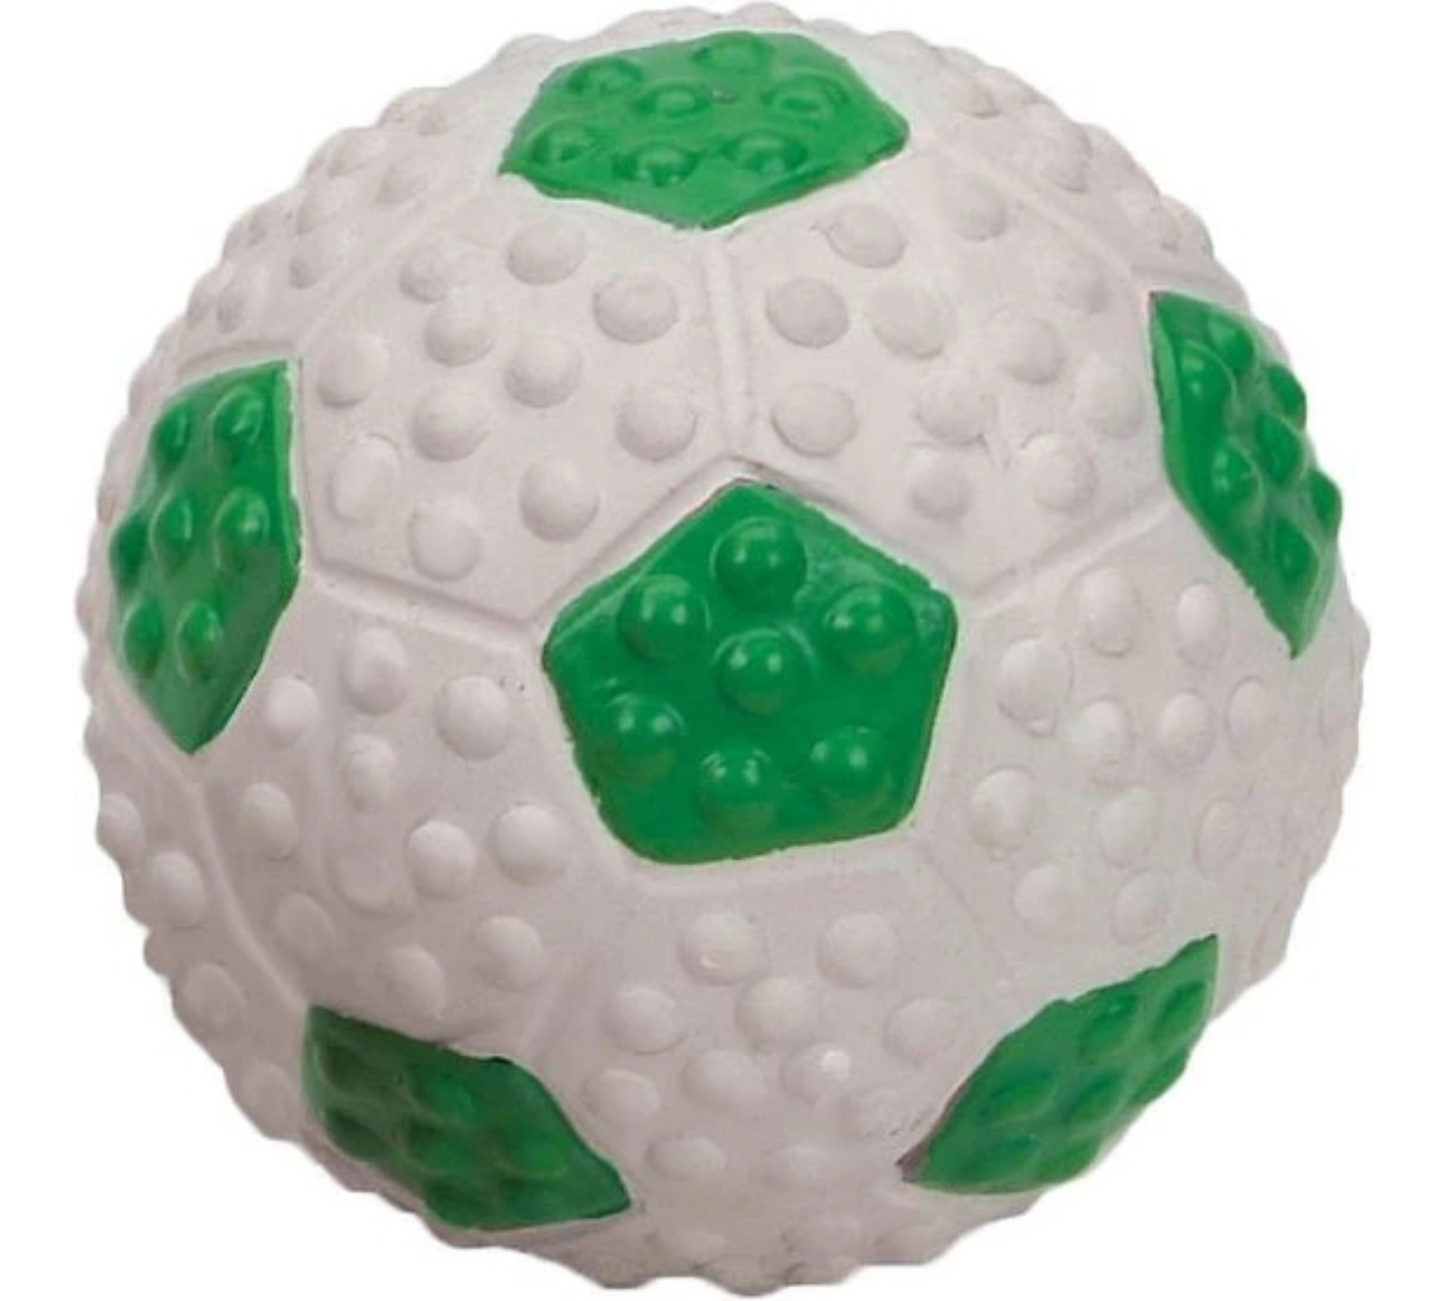 Canine's World Dog Ball Toys Li'l Pals Latex Soccer Ball Dog Toy Lil Pal's